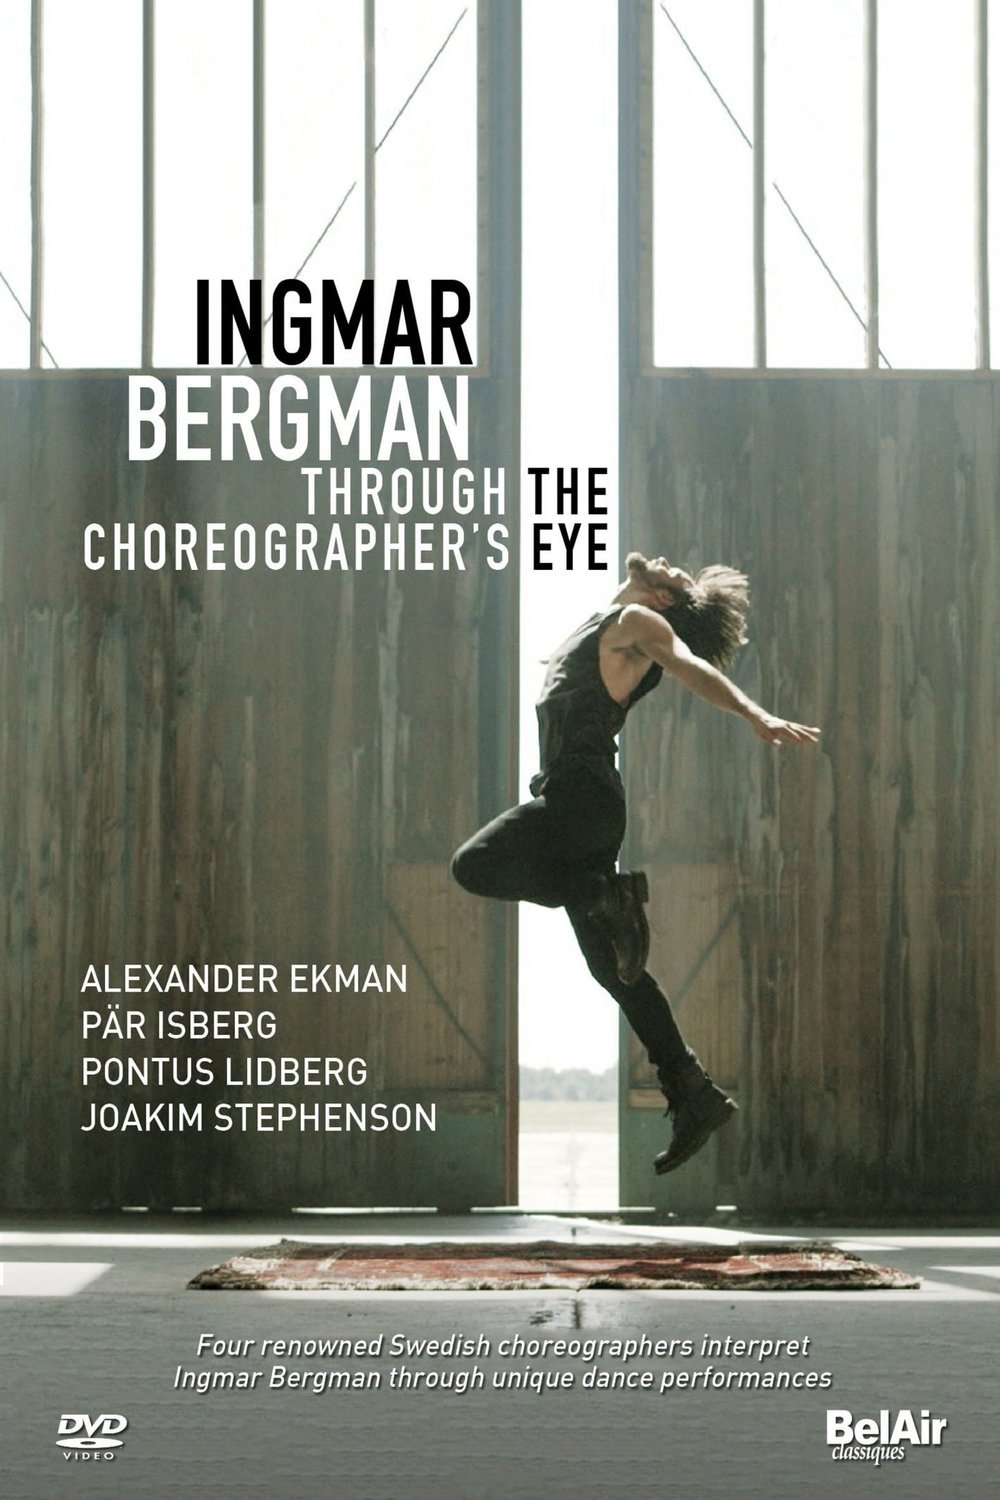 Swedish poster of the movie Ingmar Bergman through the Choreographer's eye